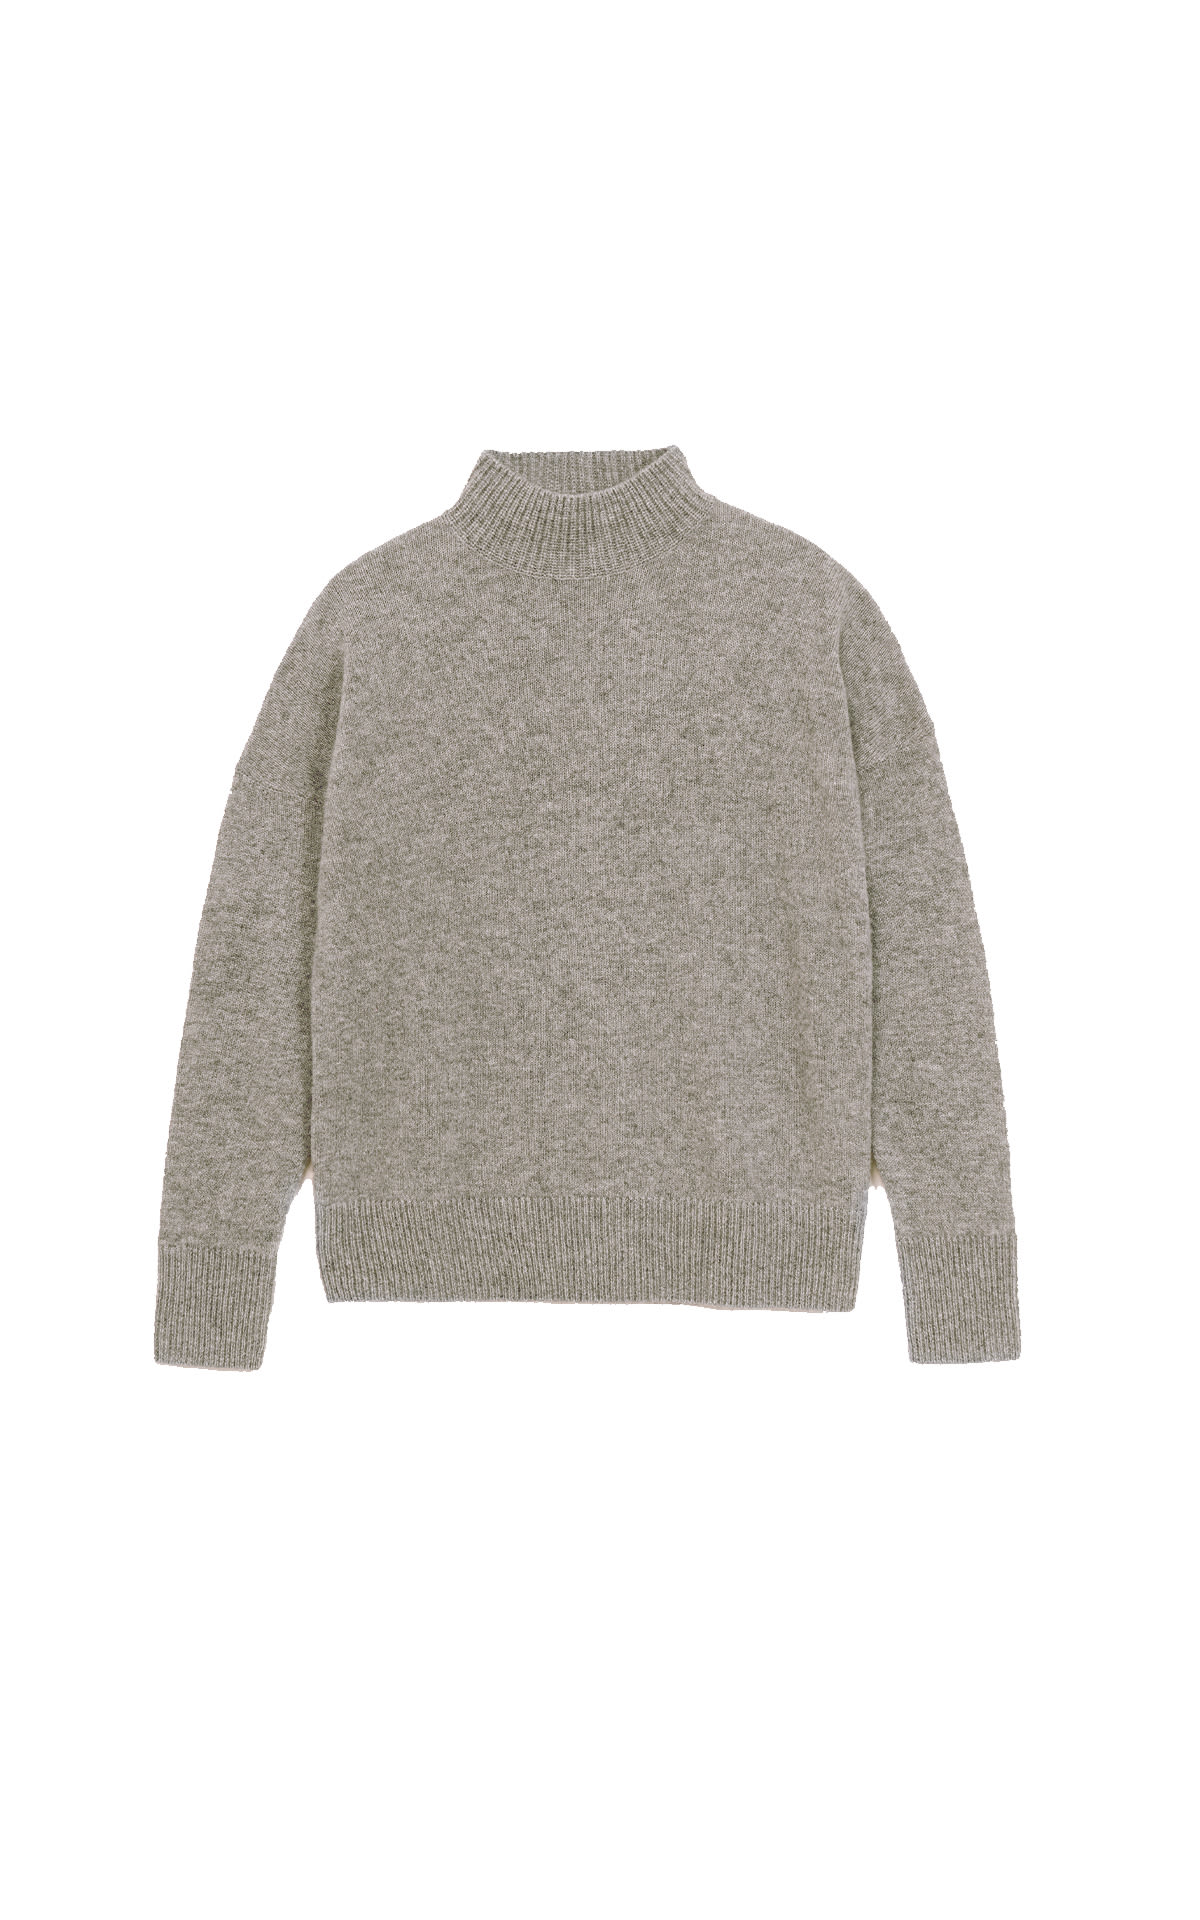 FROM FUTURE grey high-neck sweater La Vallée Village